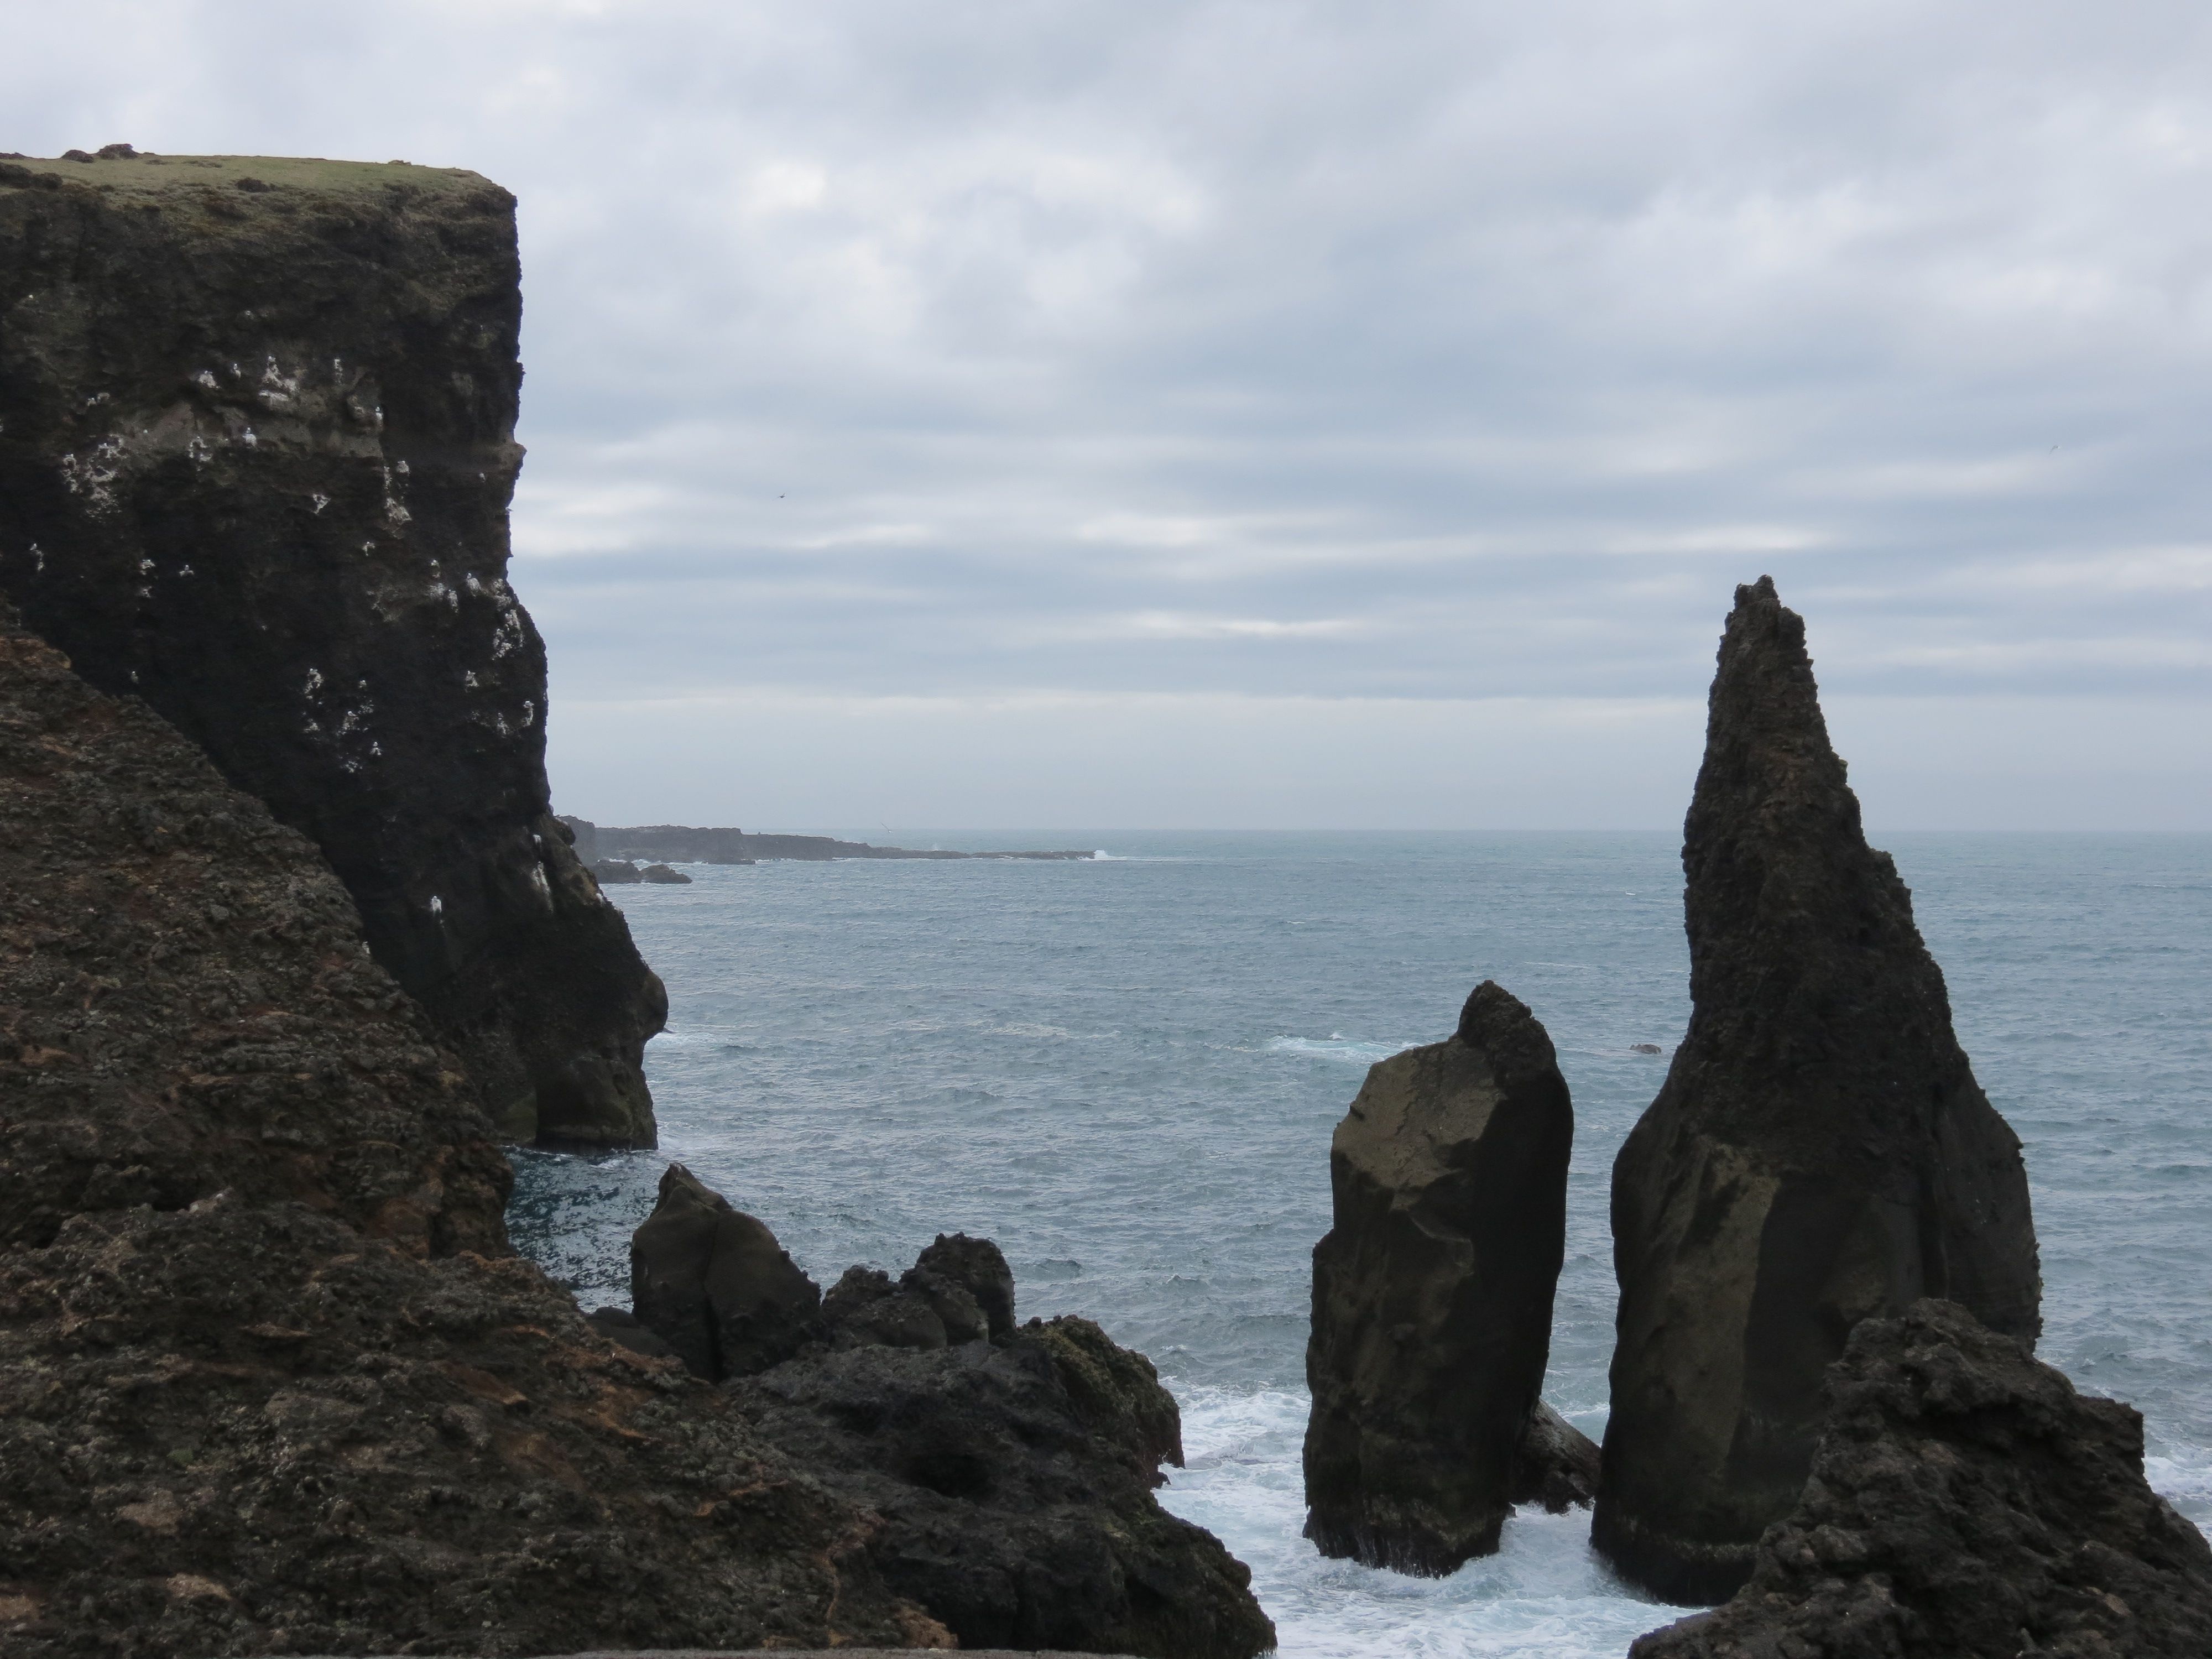 Reykjanes cliffs and sea stacks